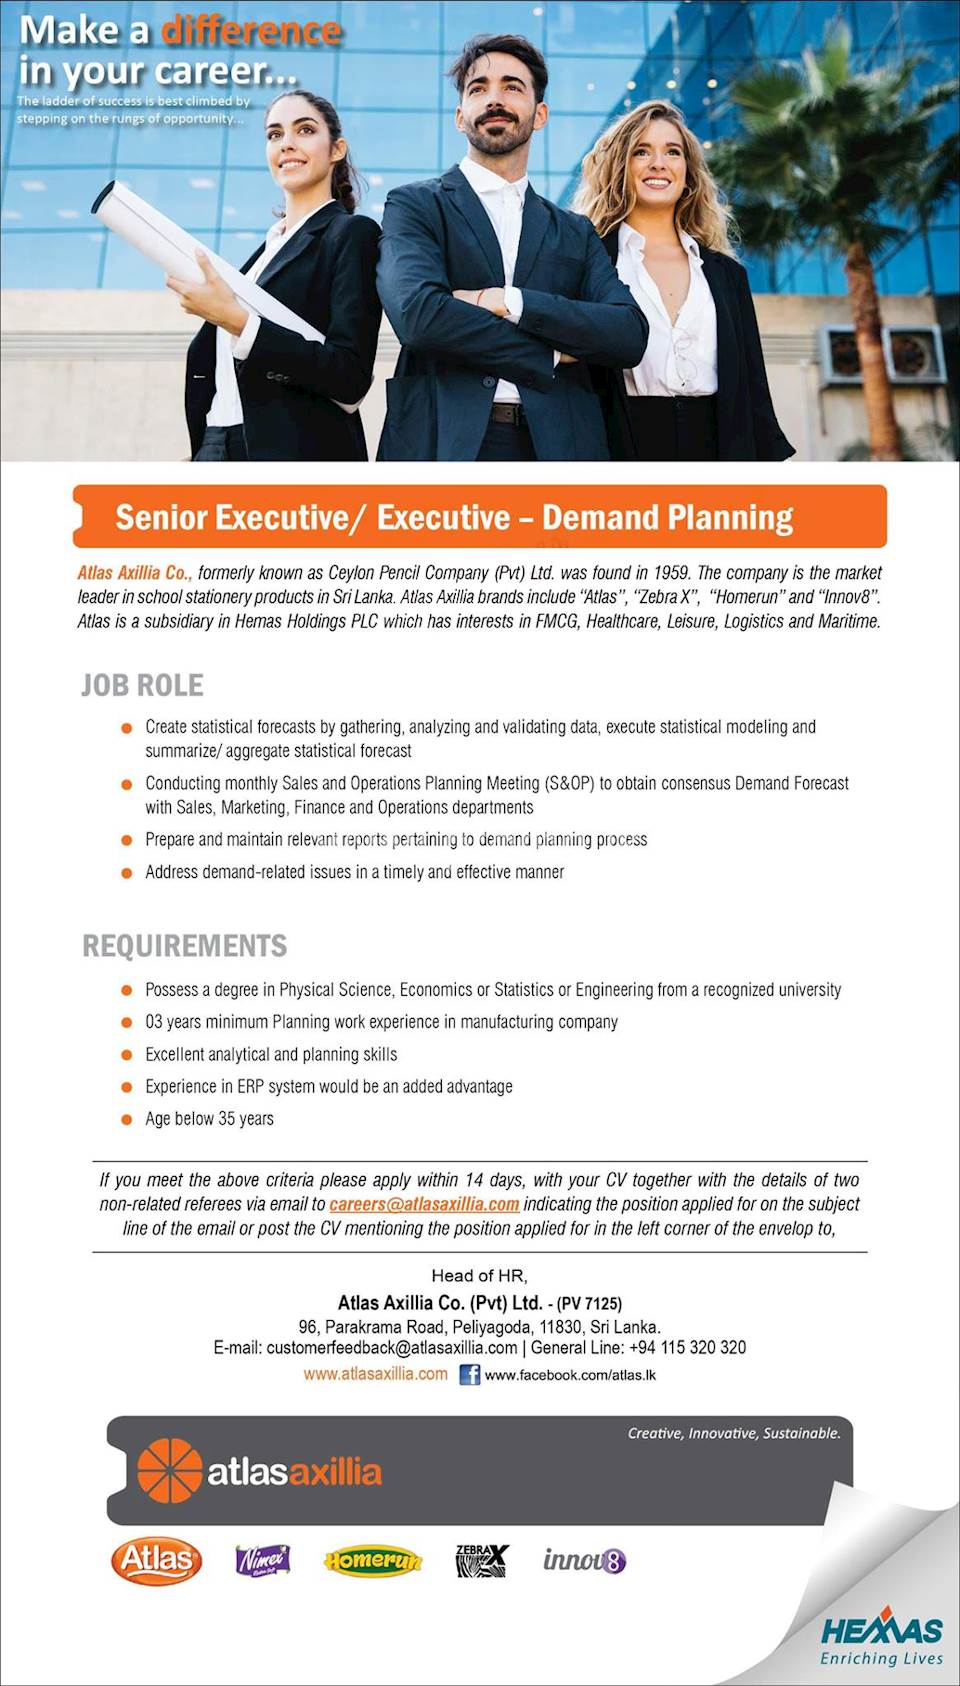 Senior Executive / Executive - Demand Planning 